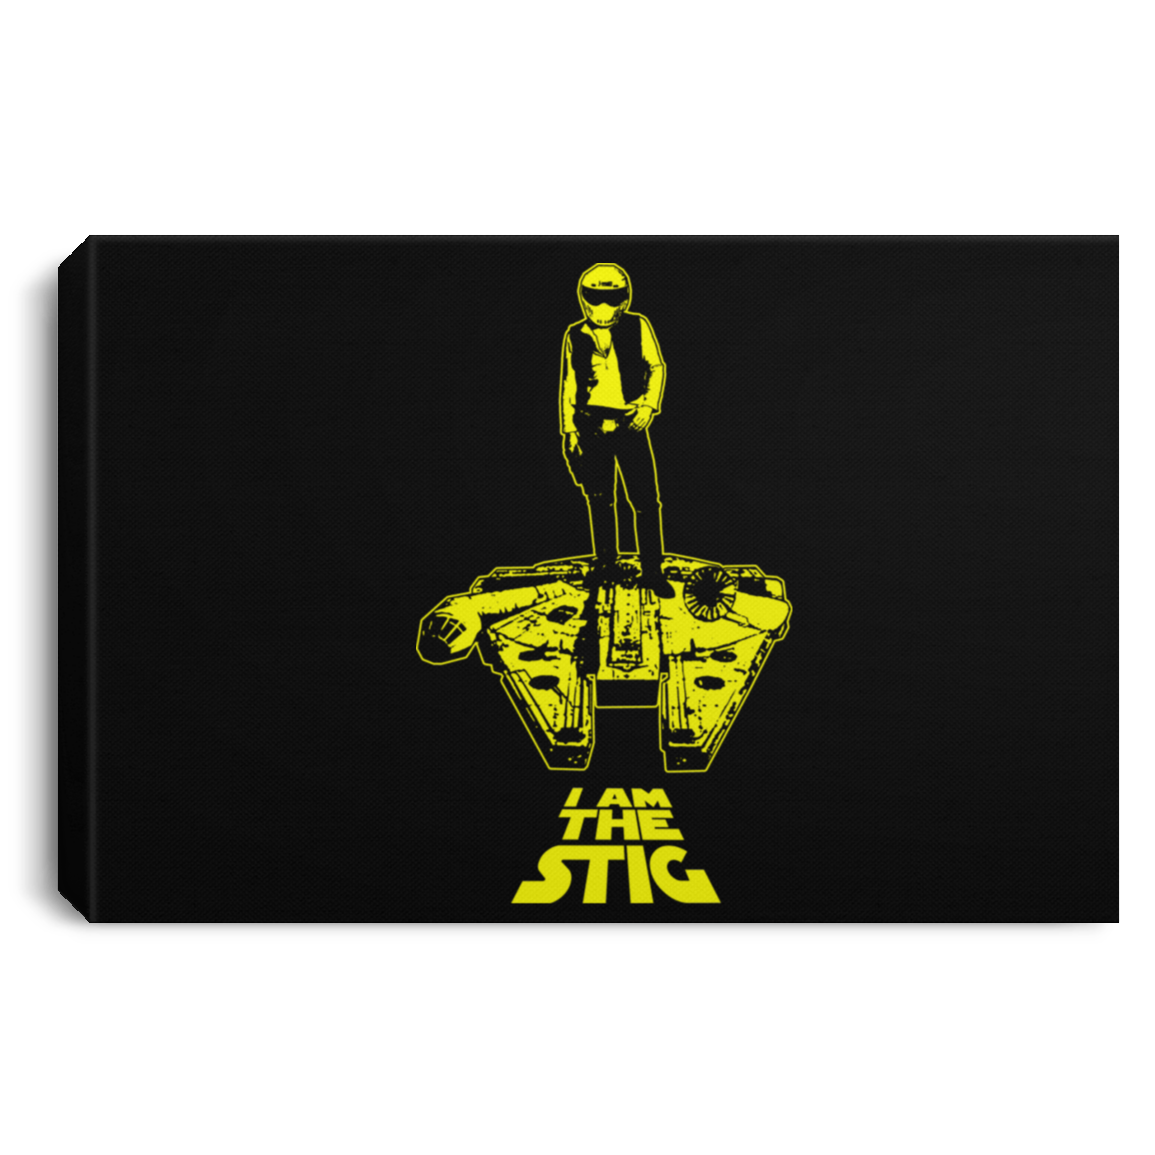 ArtichokeUSA Custom Design. I am the Stig. Han Solo / The Stig Fan Art. Landscape Canvas .75in Frame